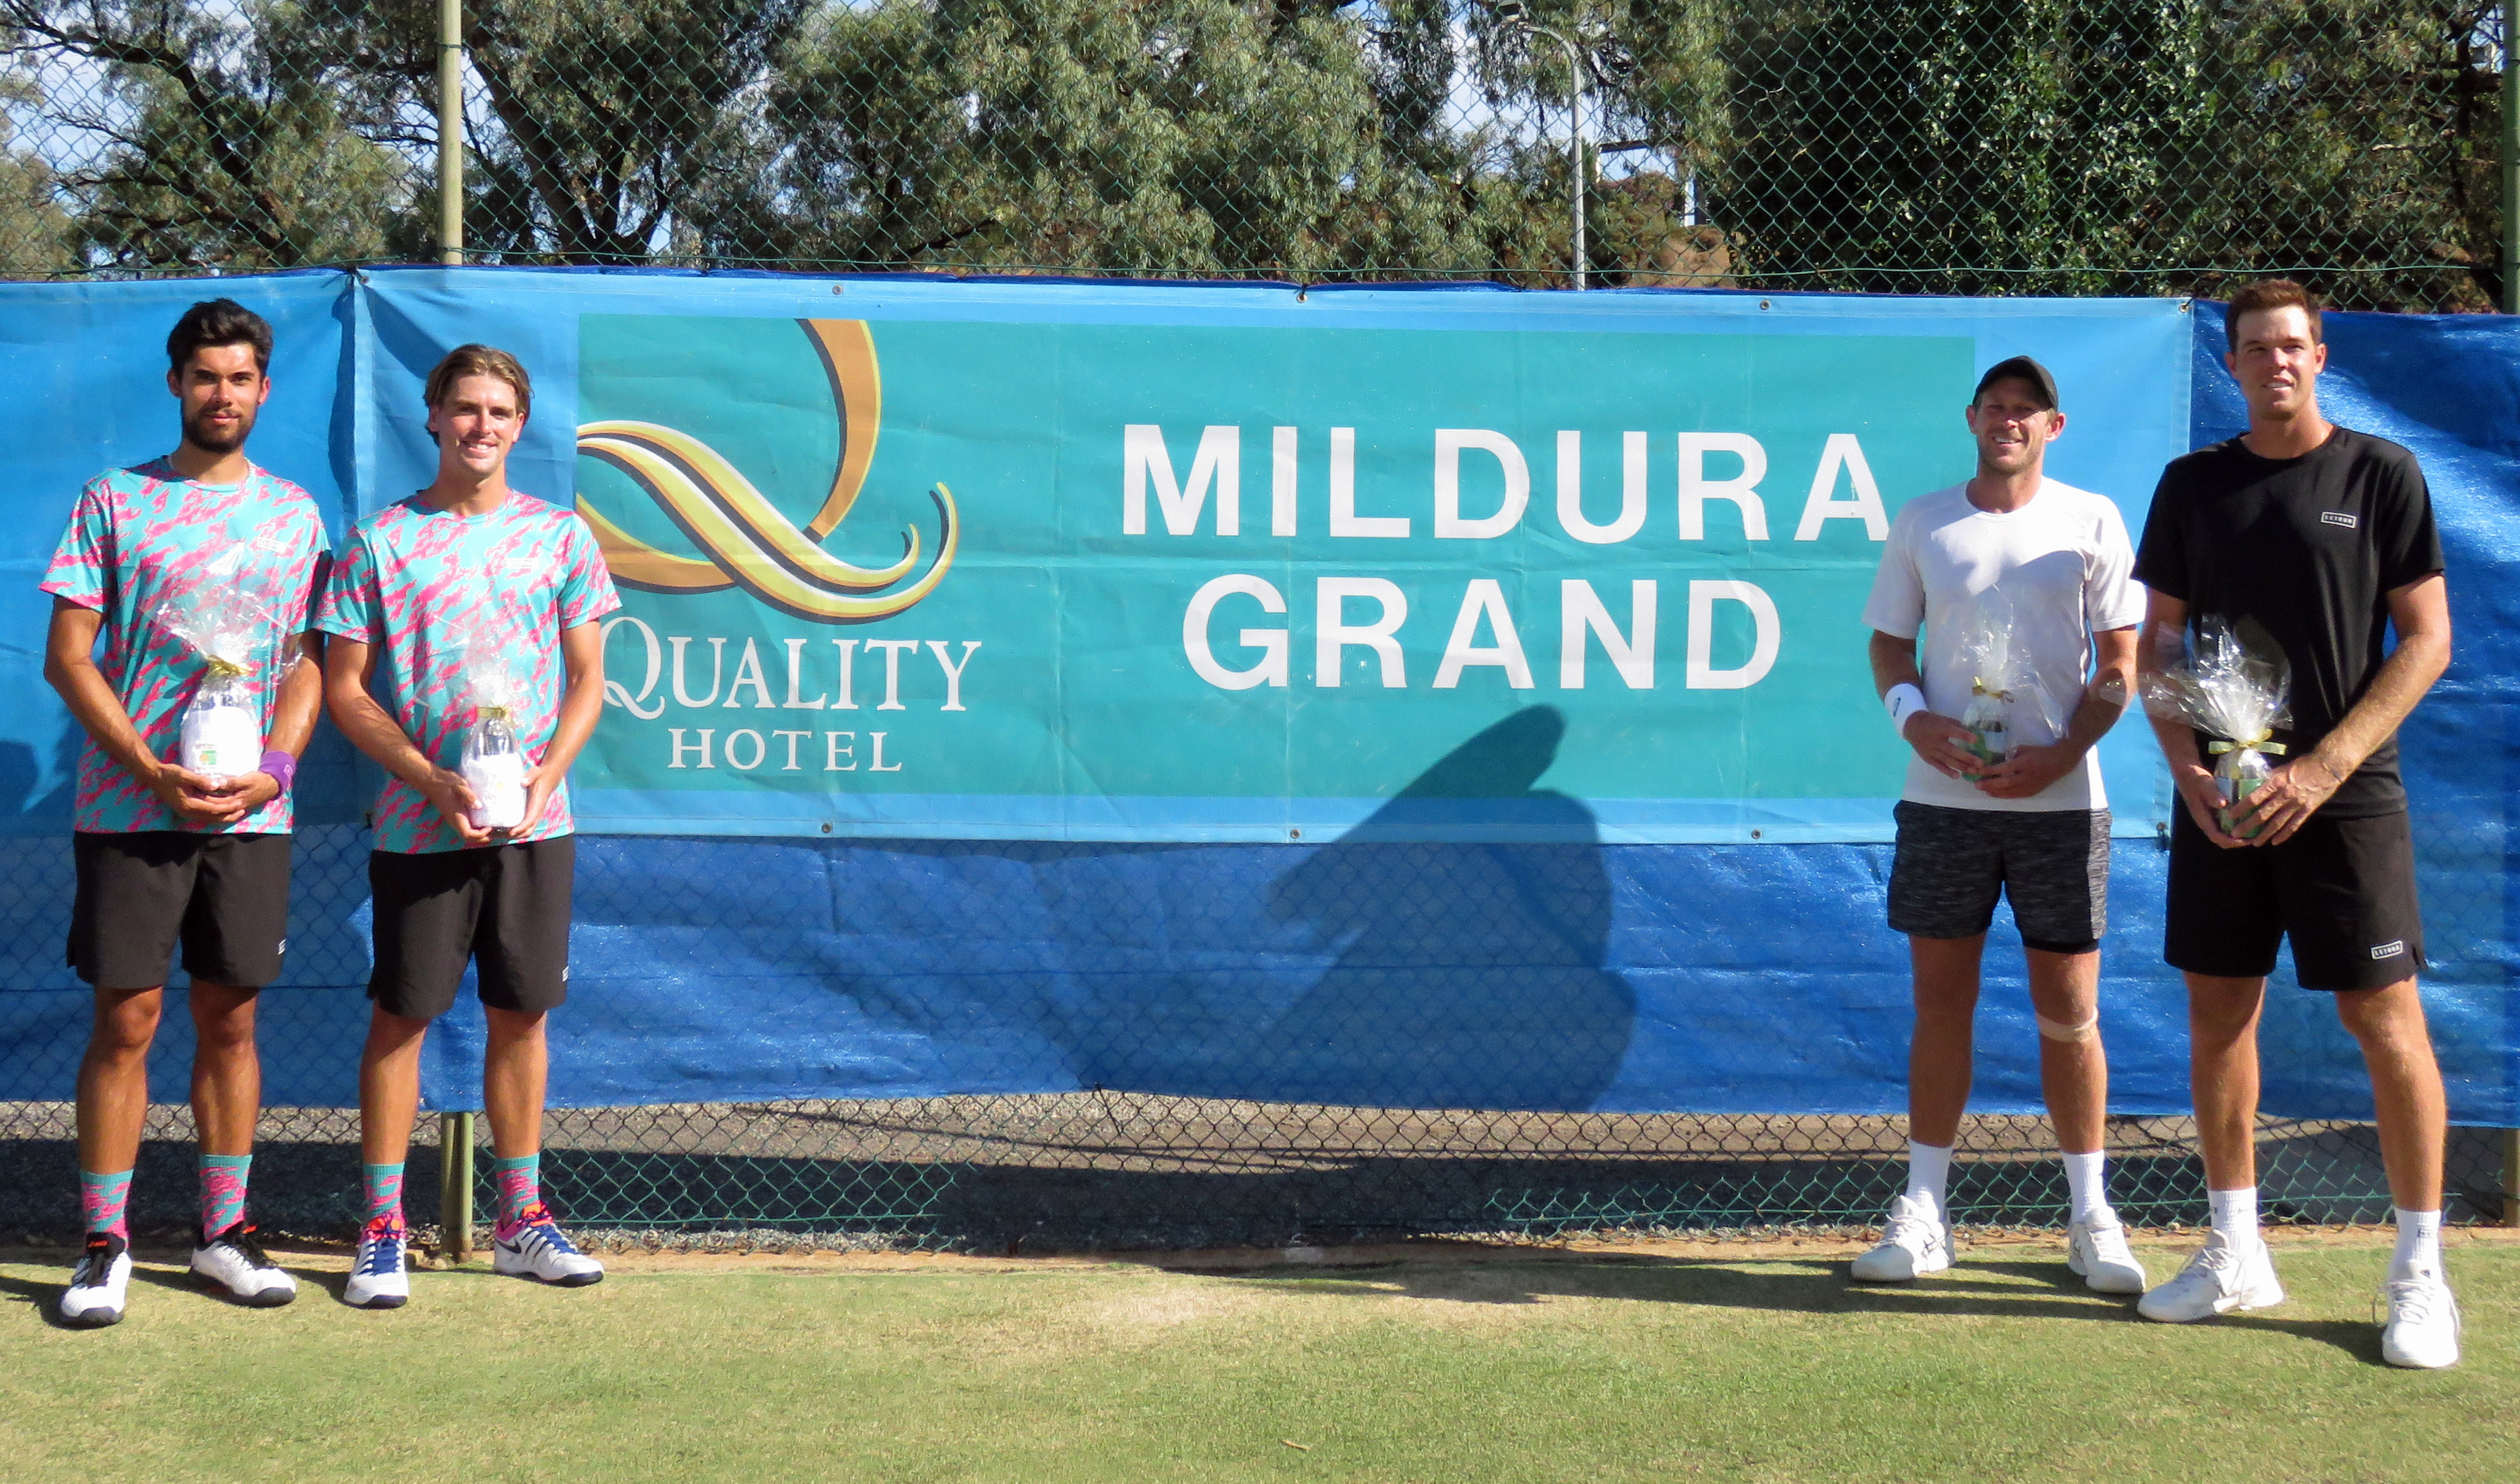 Puodziunas falls short in Mildura semis 7 March, 2020 All News News and Features News and Events Tennis Australia